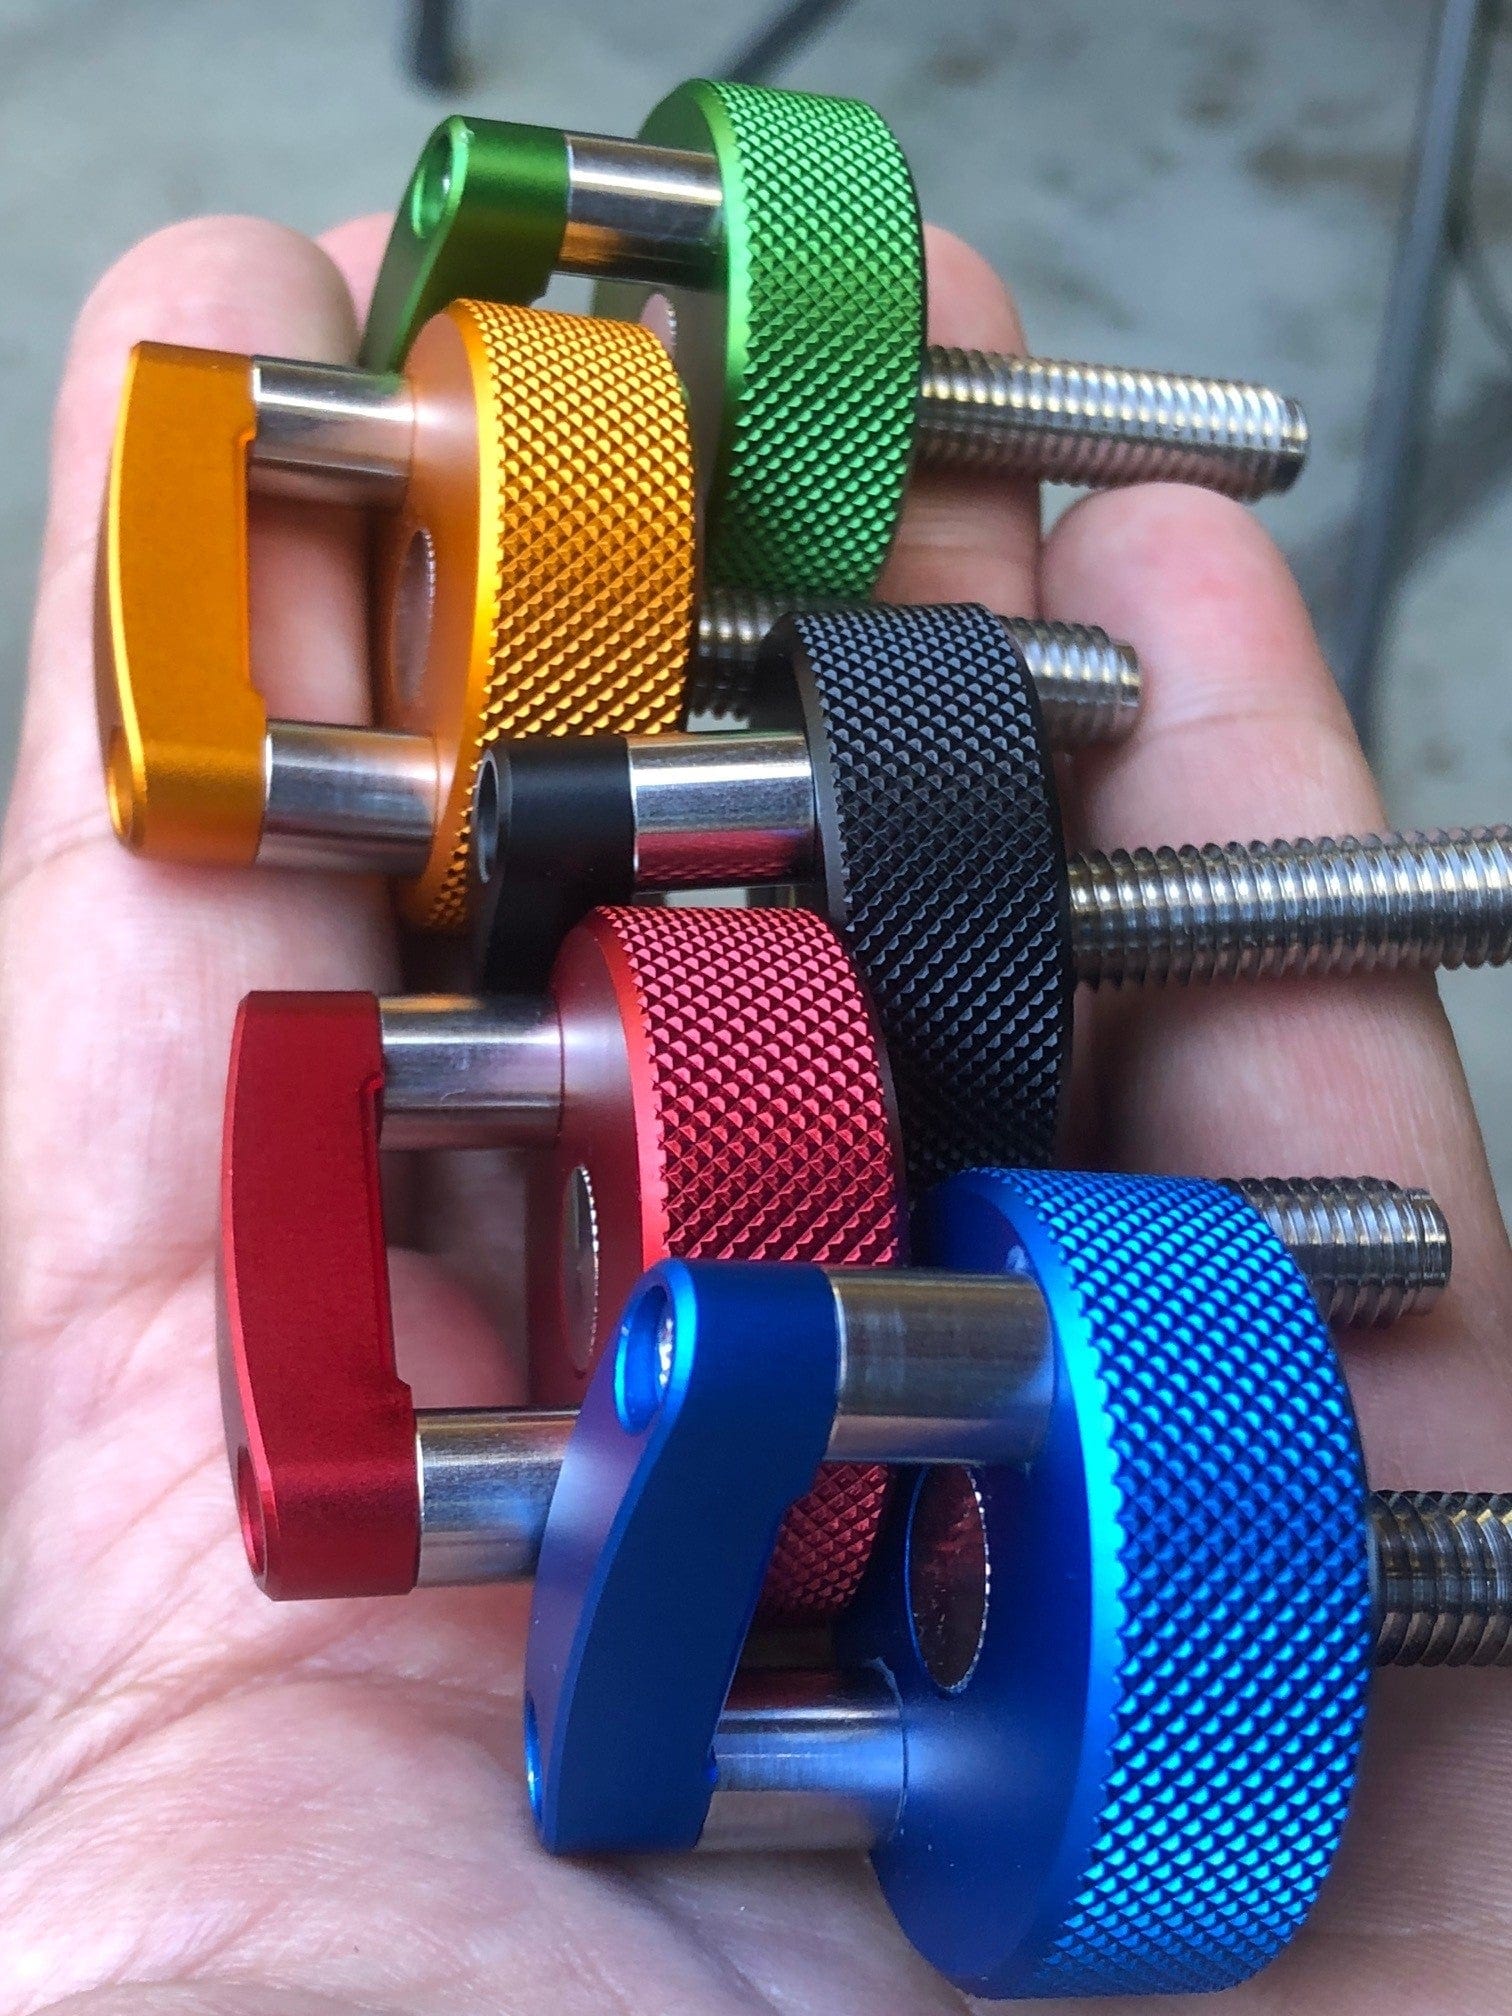 JEEP Wrangler JK, JL & JT Hard Top Quick Removal Fastener Thumb Screws, integrated D Ring, ROCKWORKX Billet Aluminum (Six Piece Set) rockworkx